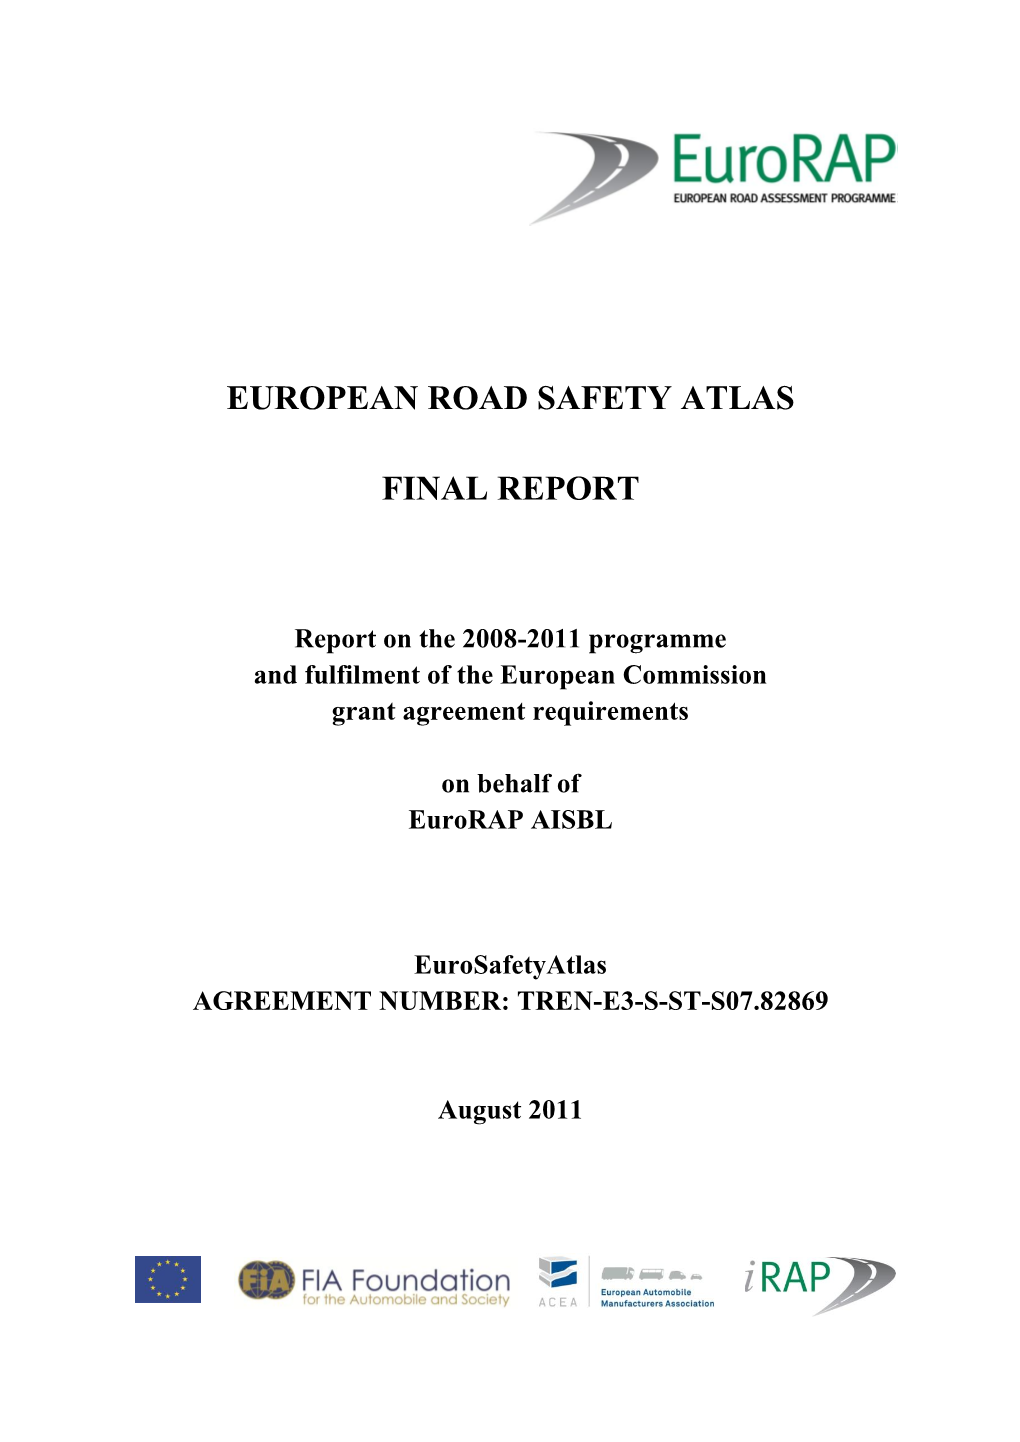 European Road Safety Atlas Final Report